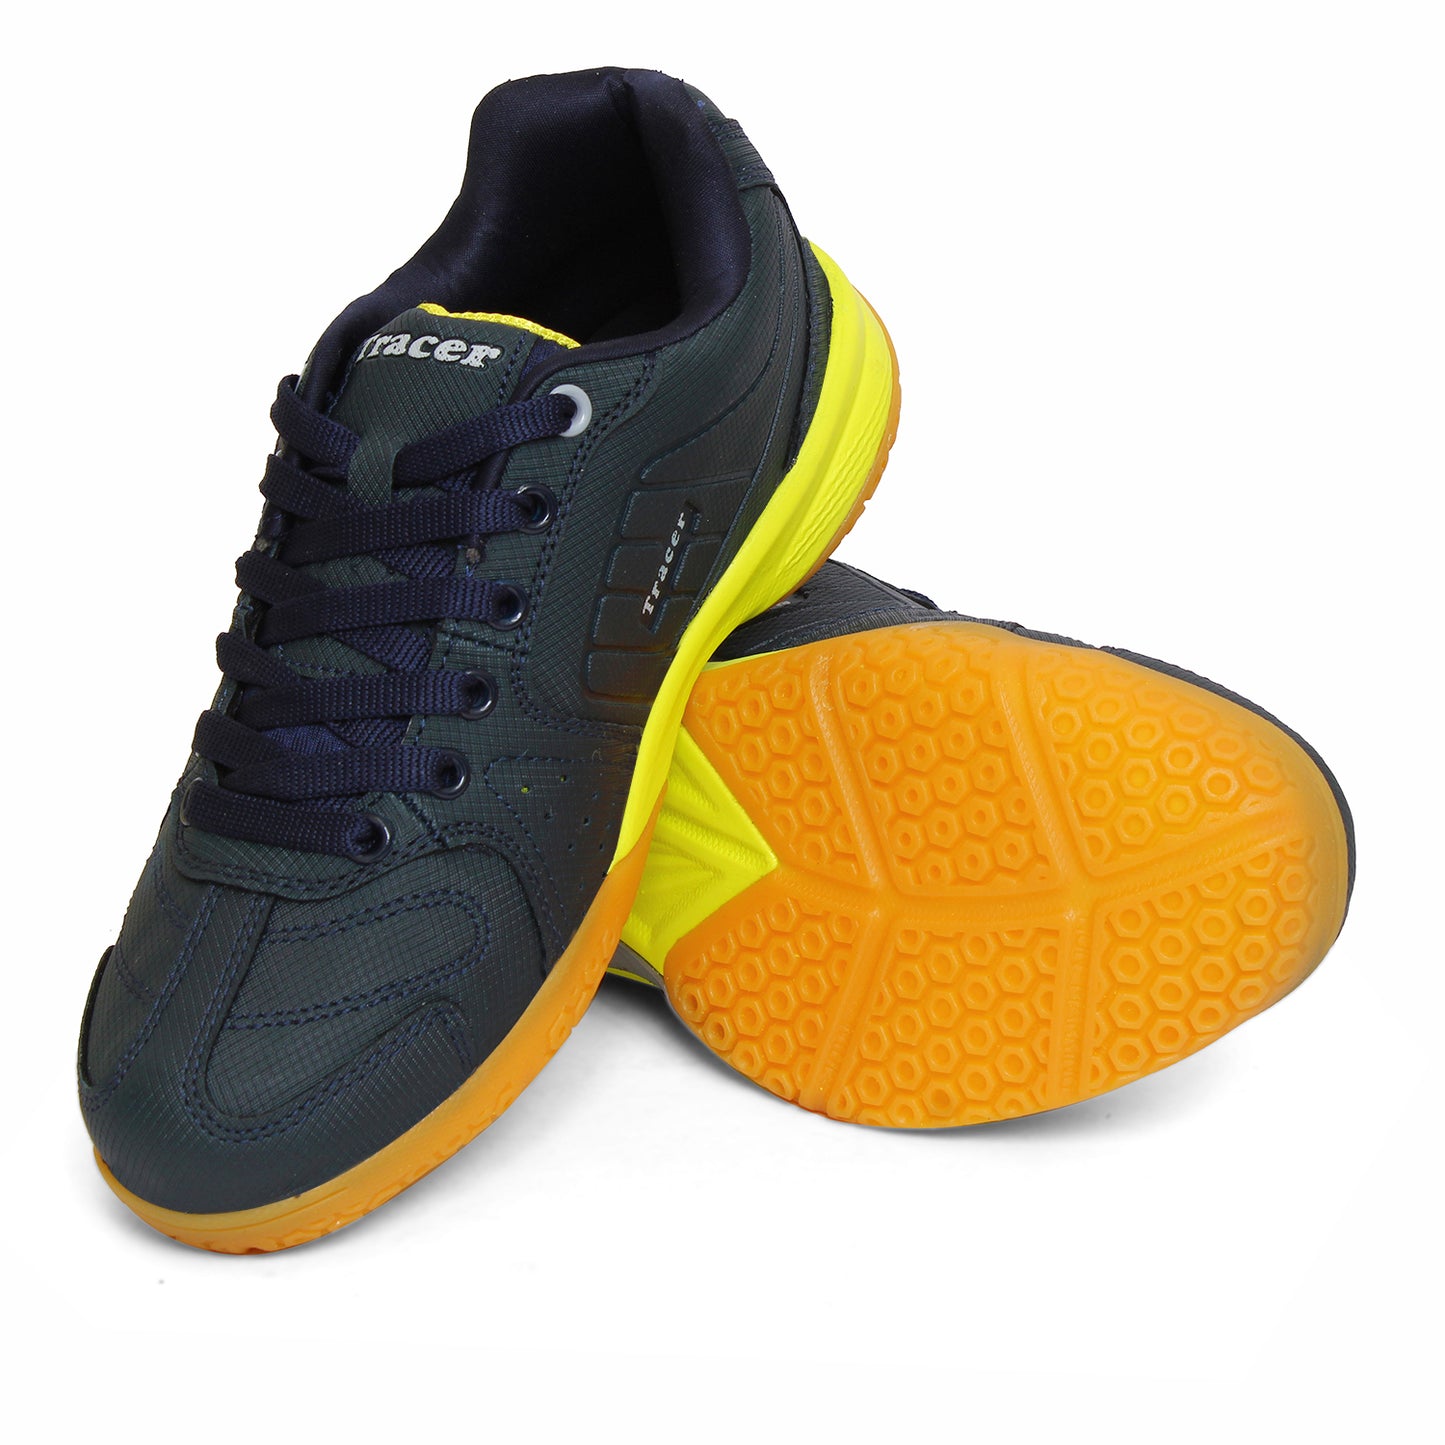 Tennis Badminton Sports Shoe For Kid's Navy Neon